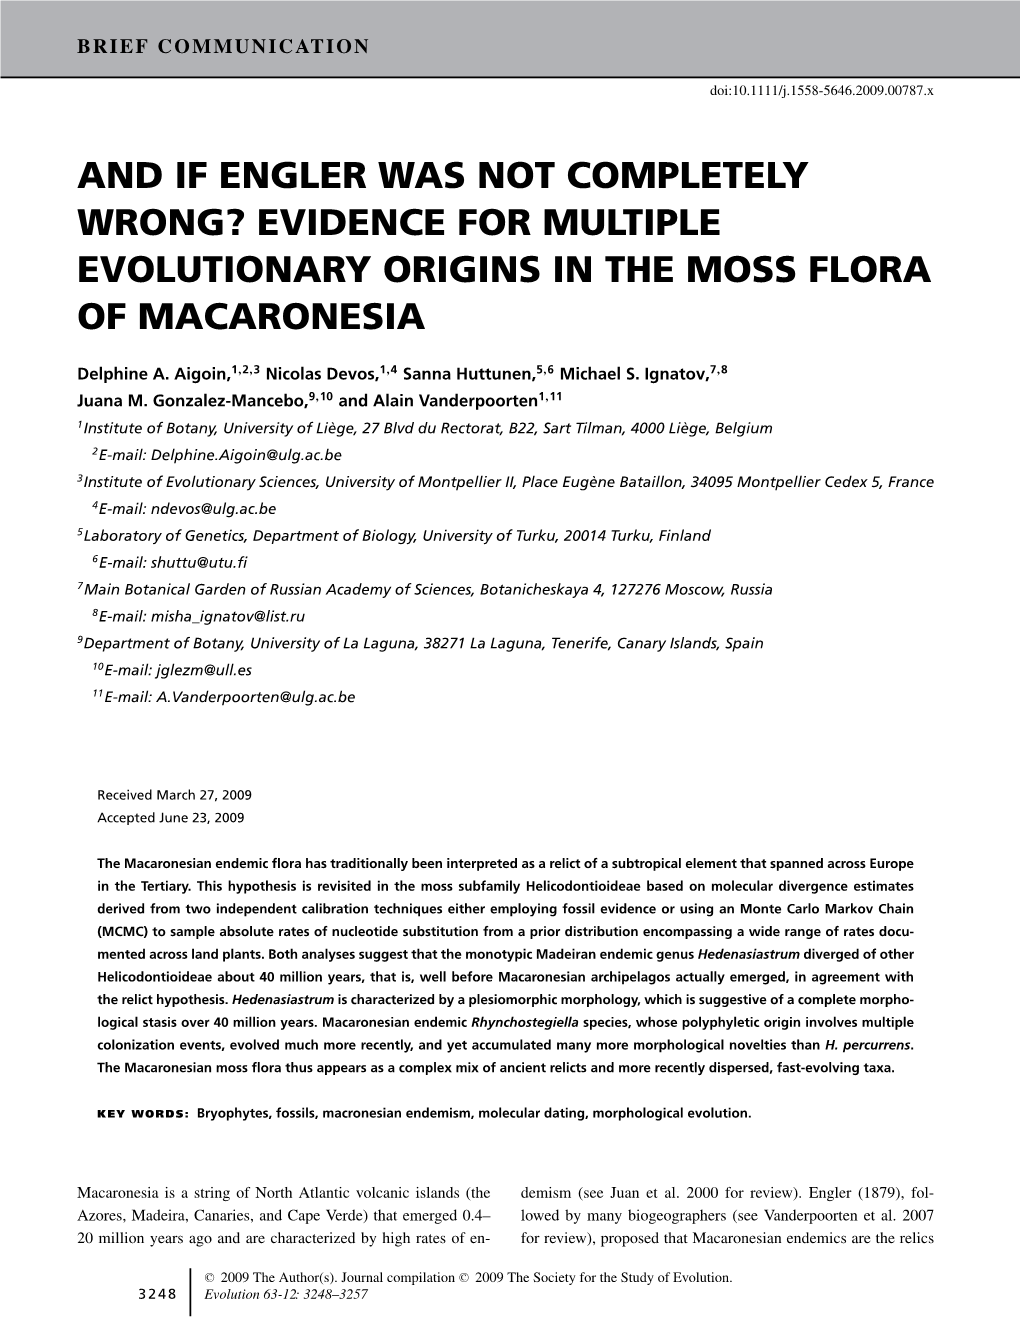 Evidence for Multiple Evolutionary Origins in the Moss Flora of Macaronesia